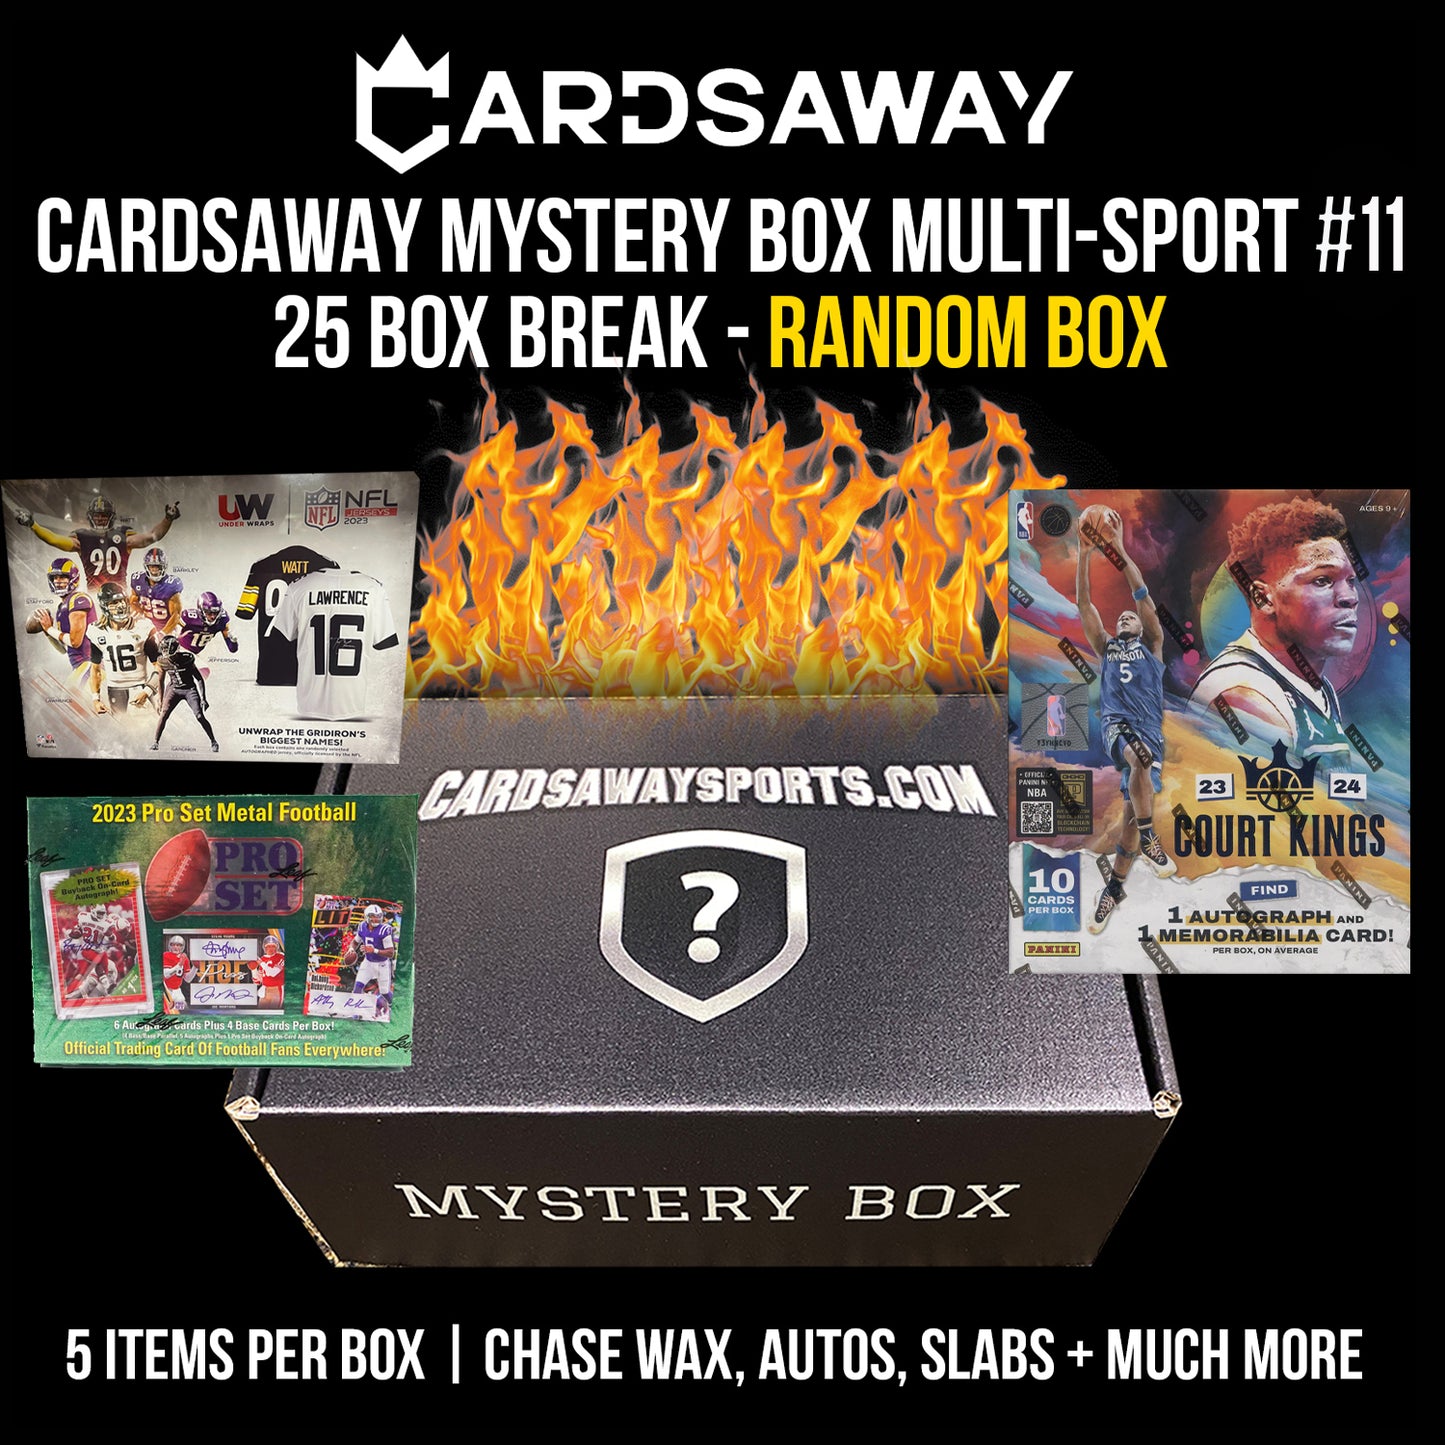 CARDSAWAY MYSTERY BOX MULTI-SPORT  - 25 Box Break - RANDOM BOX #11 (GIFT CARDS/DISCOUNTS EXCLUDED)